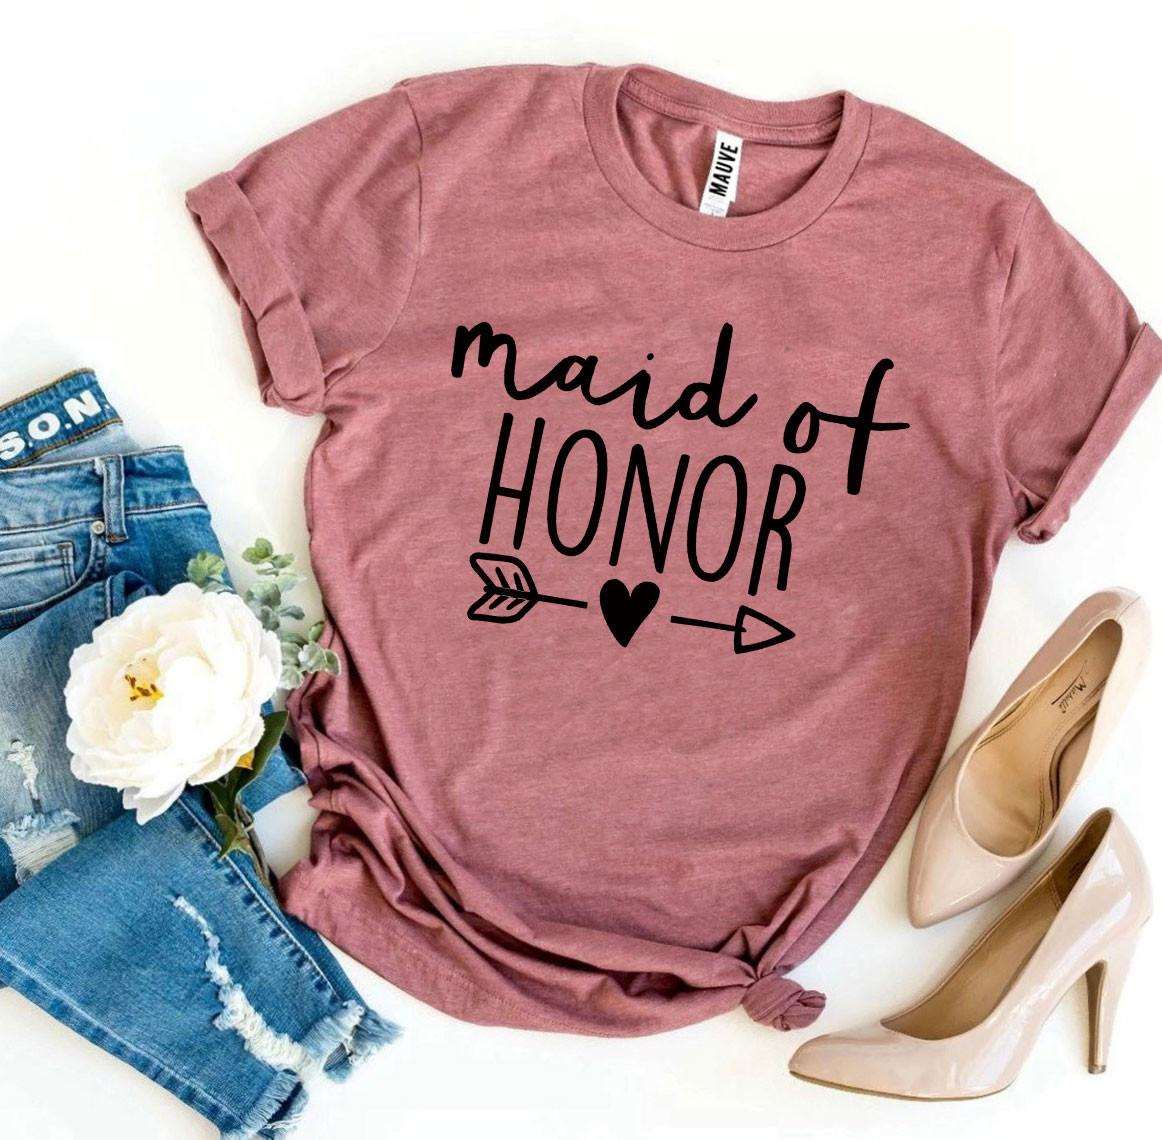 Nfin8 Bridal Squad Elegance - 'Maid of Honor' Premium Soft T-Shirt